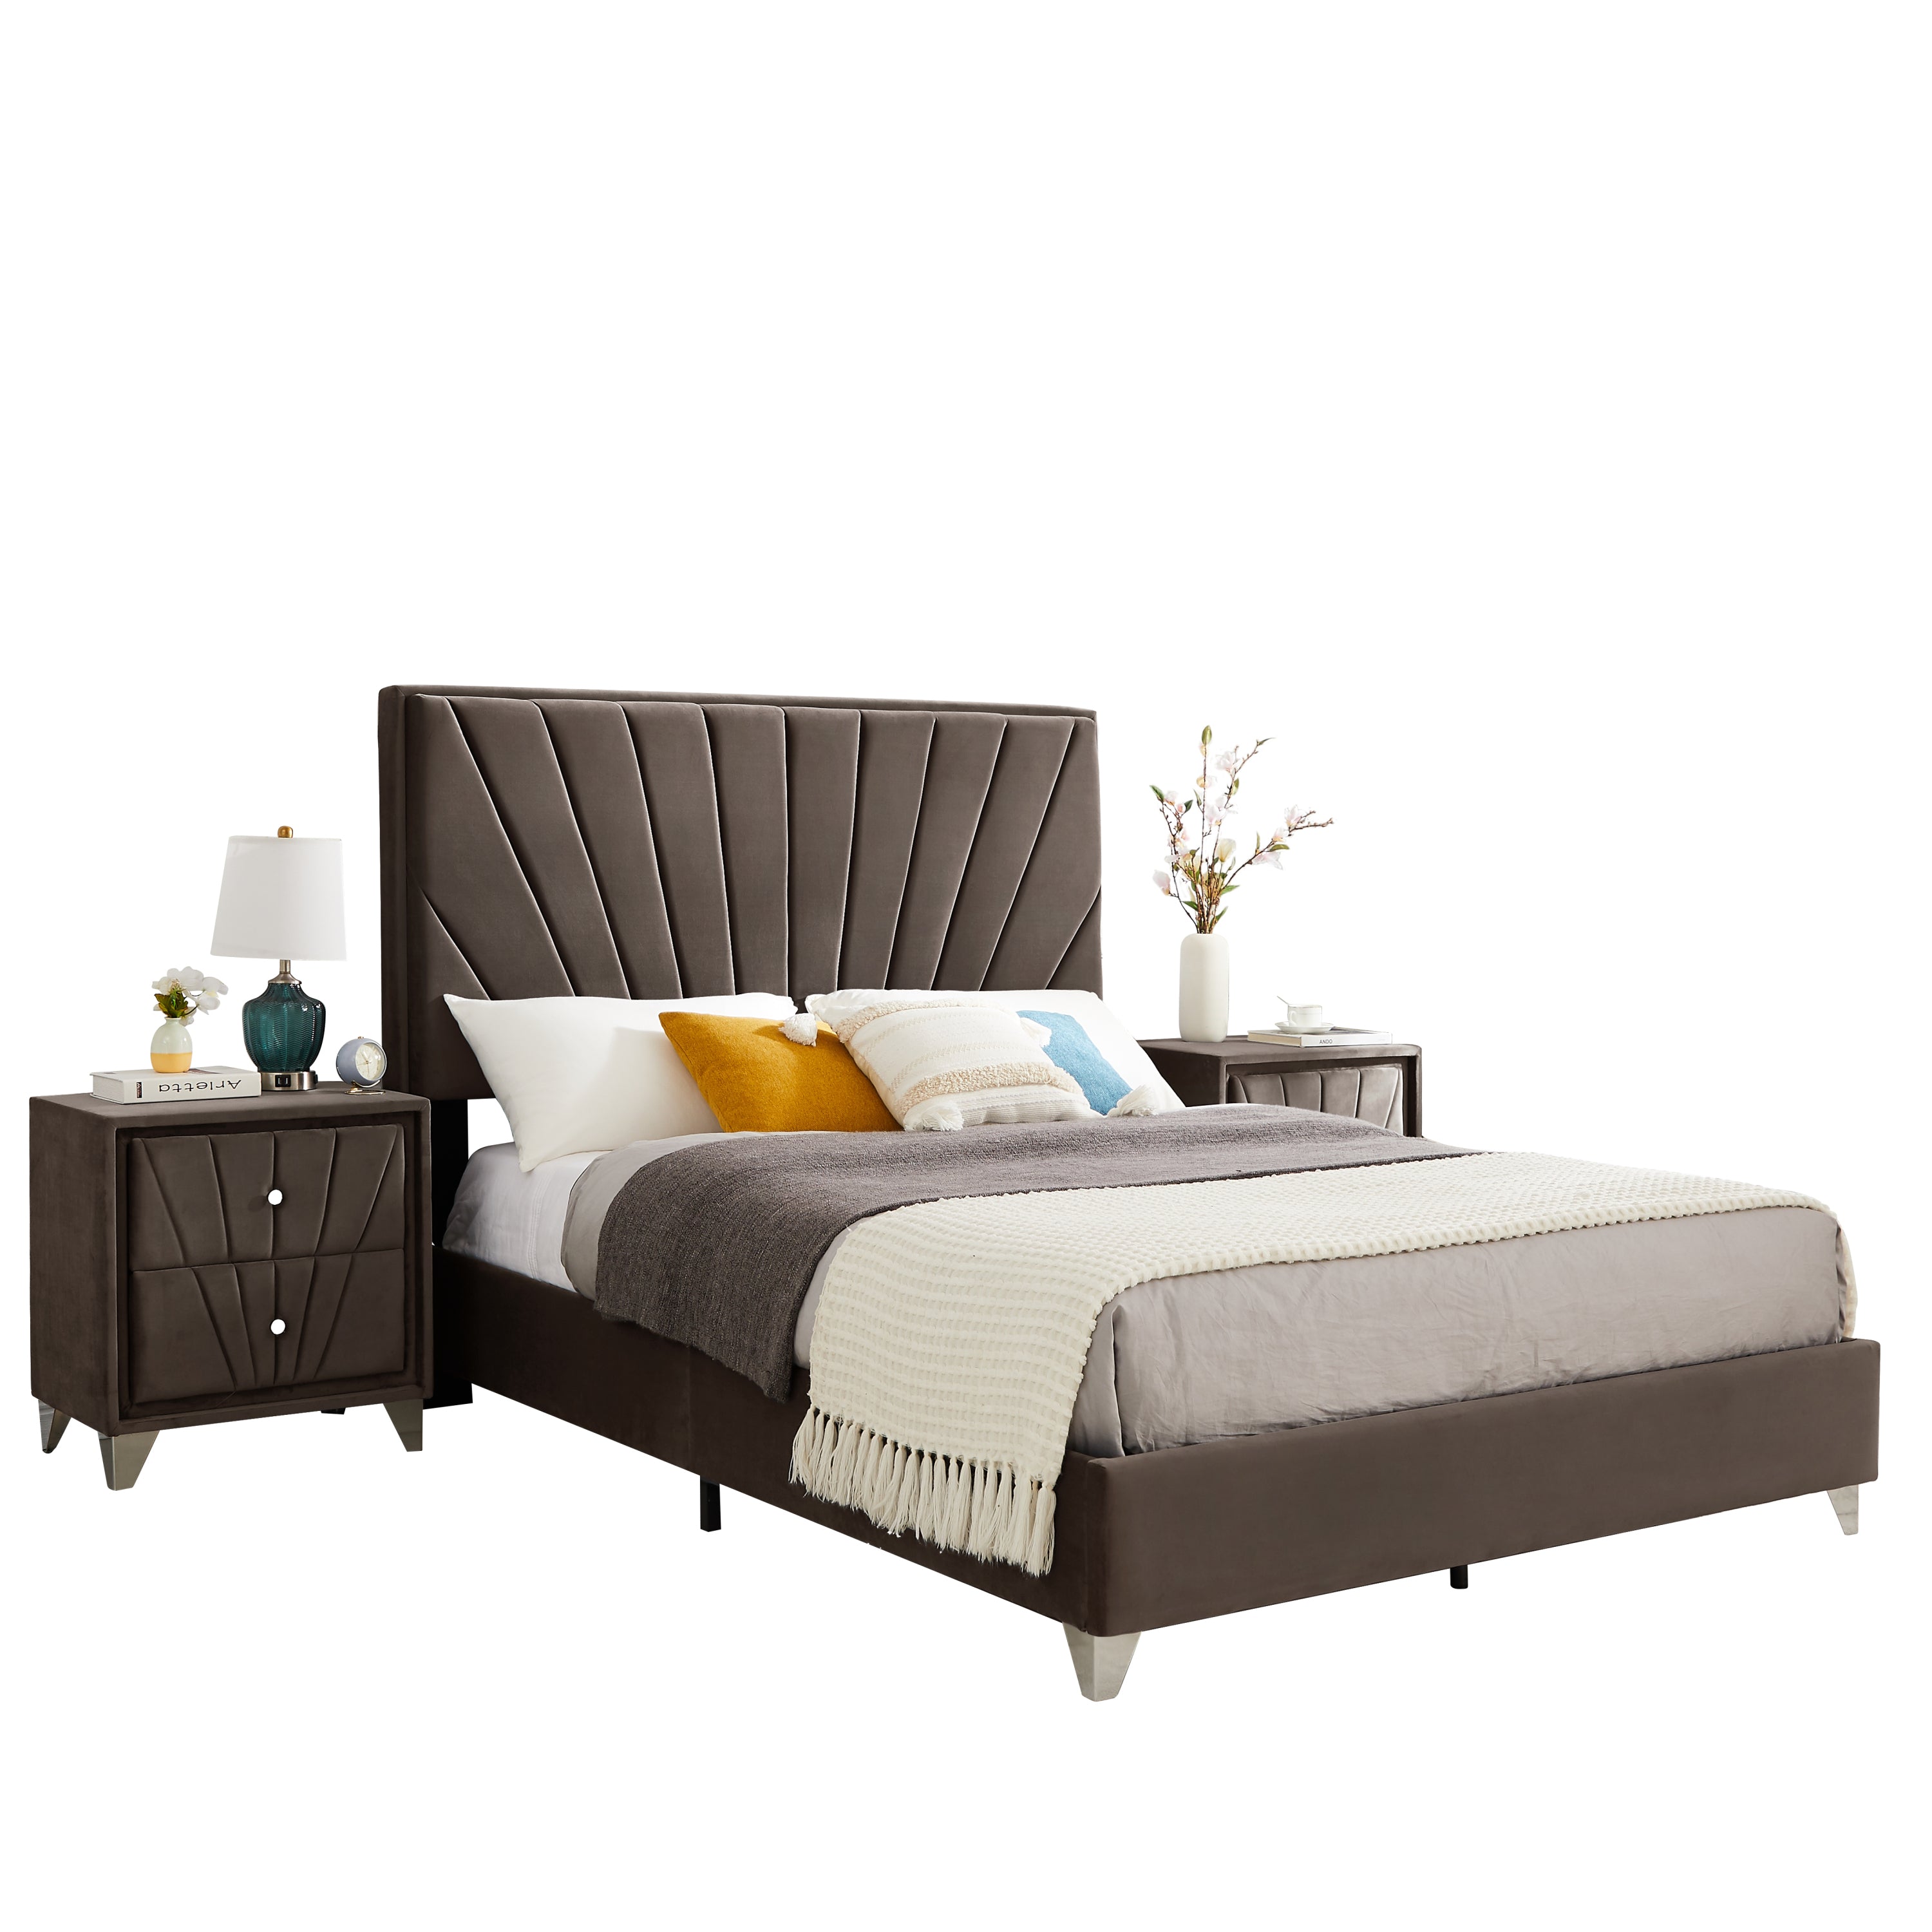 Full bed with One (1) nightstand, line stripe cushion headboard